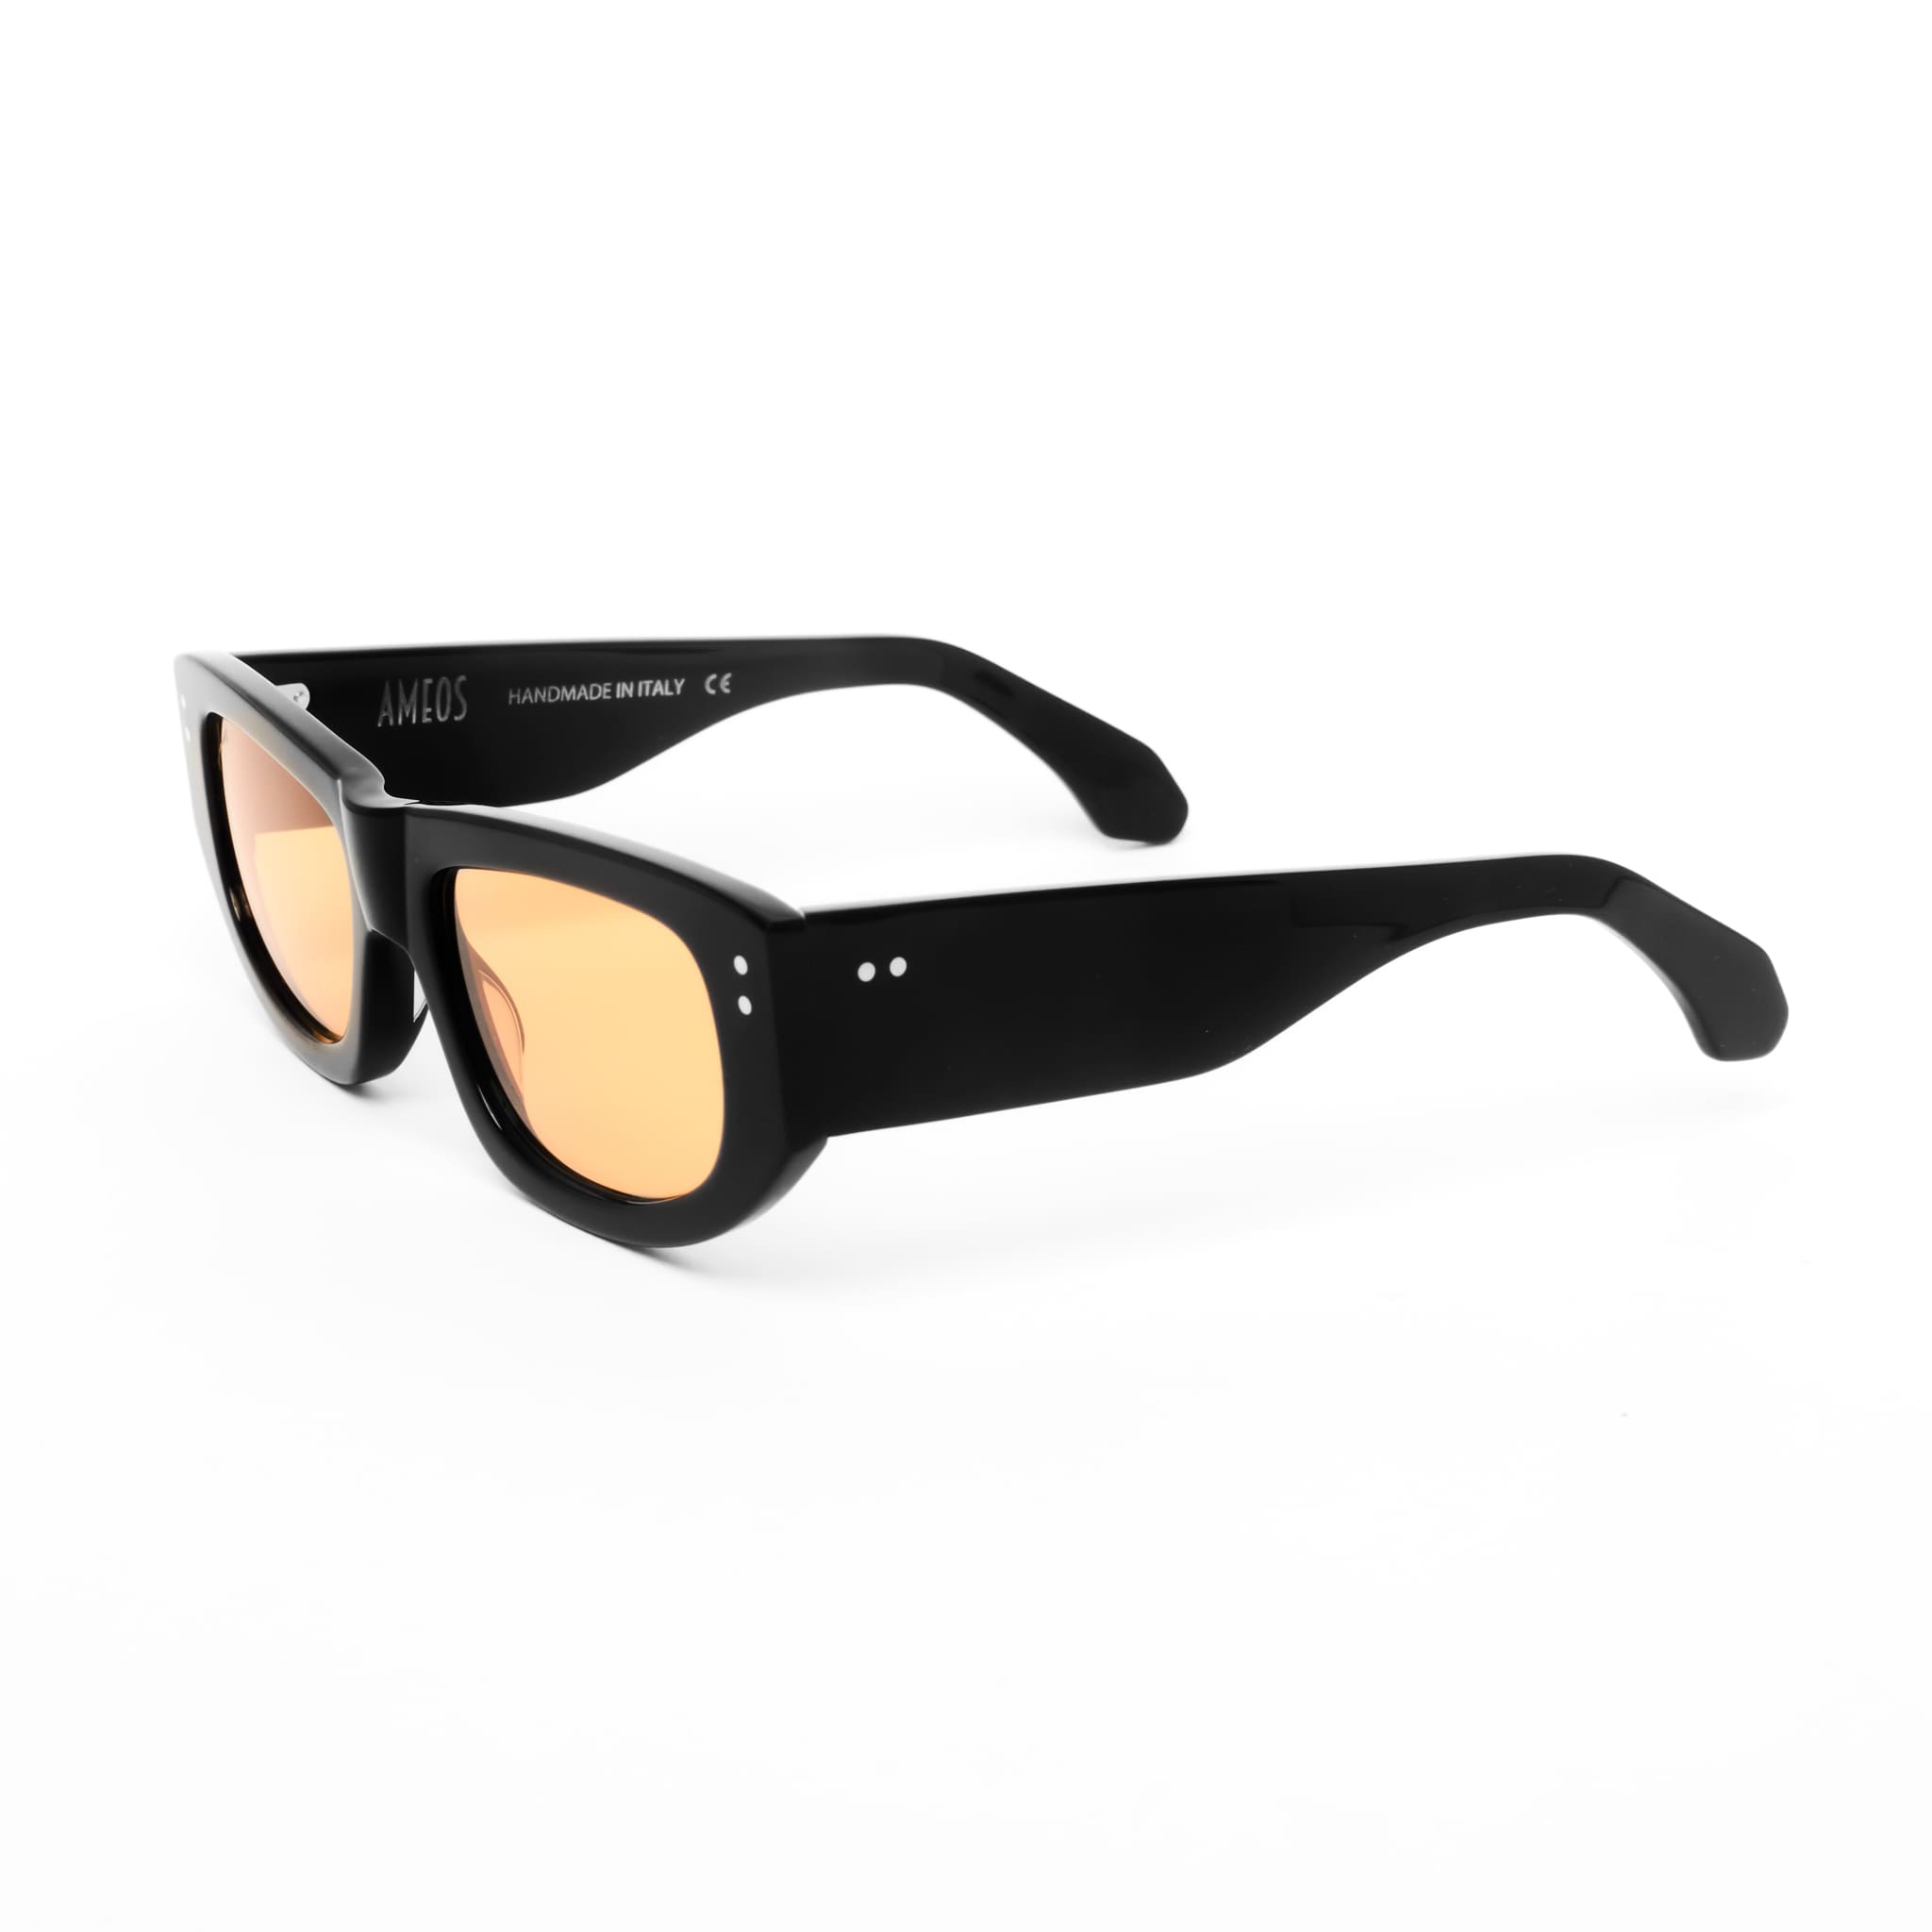 Ameos Forever collection Max model. Black frames with orange lenses. Side view. Genderless, gender neutral eyewear